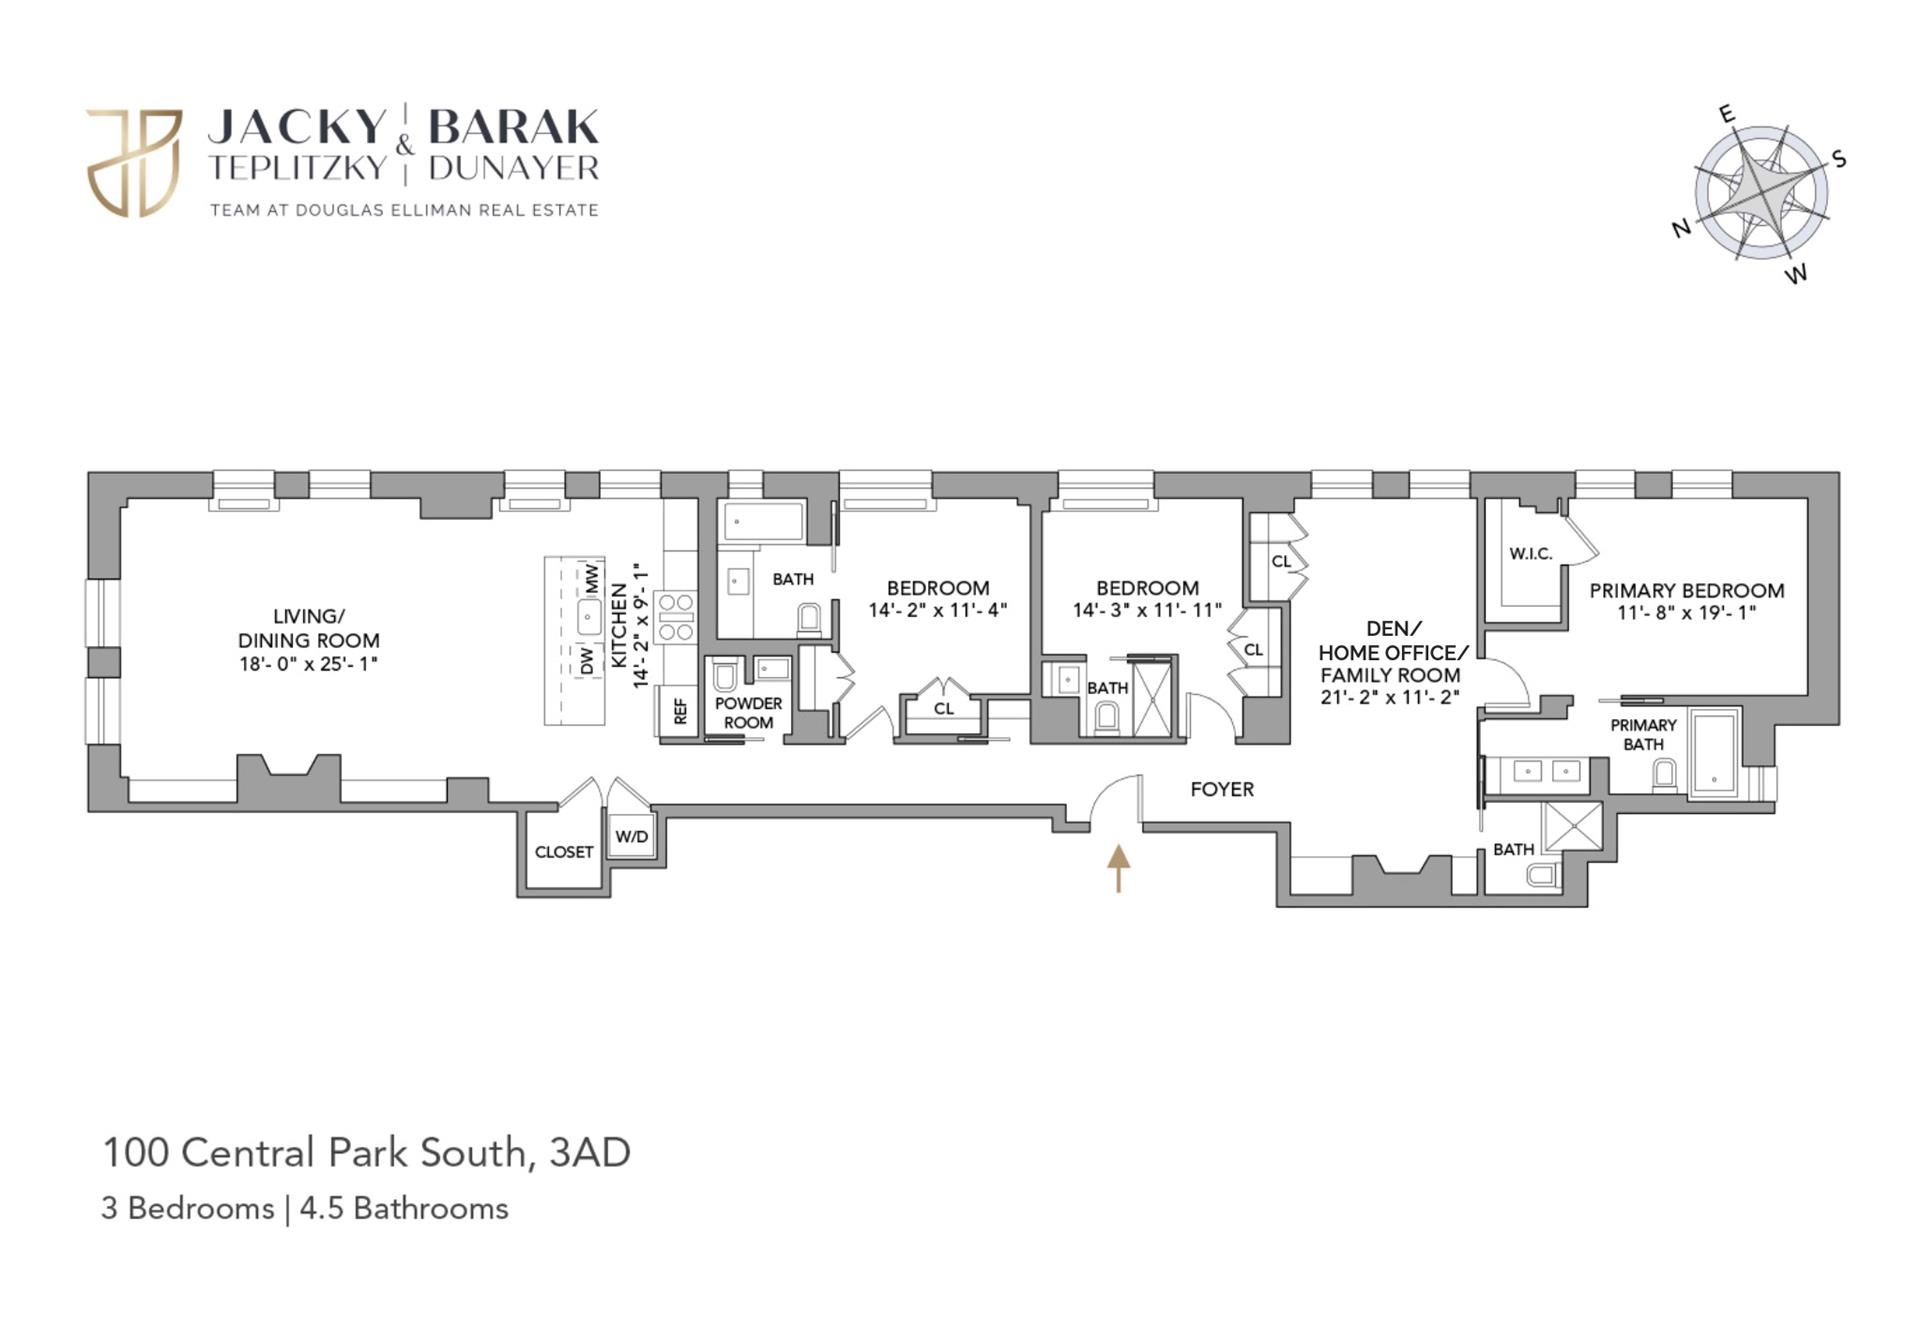 Floorplan for 100 Central Park, 3AD